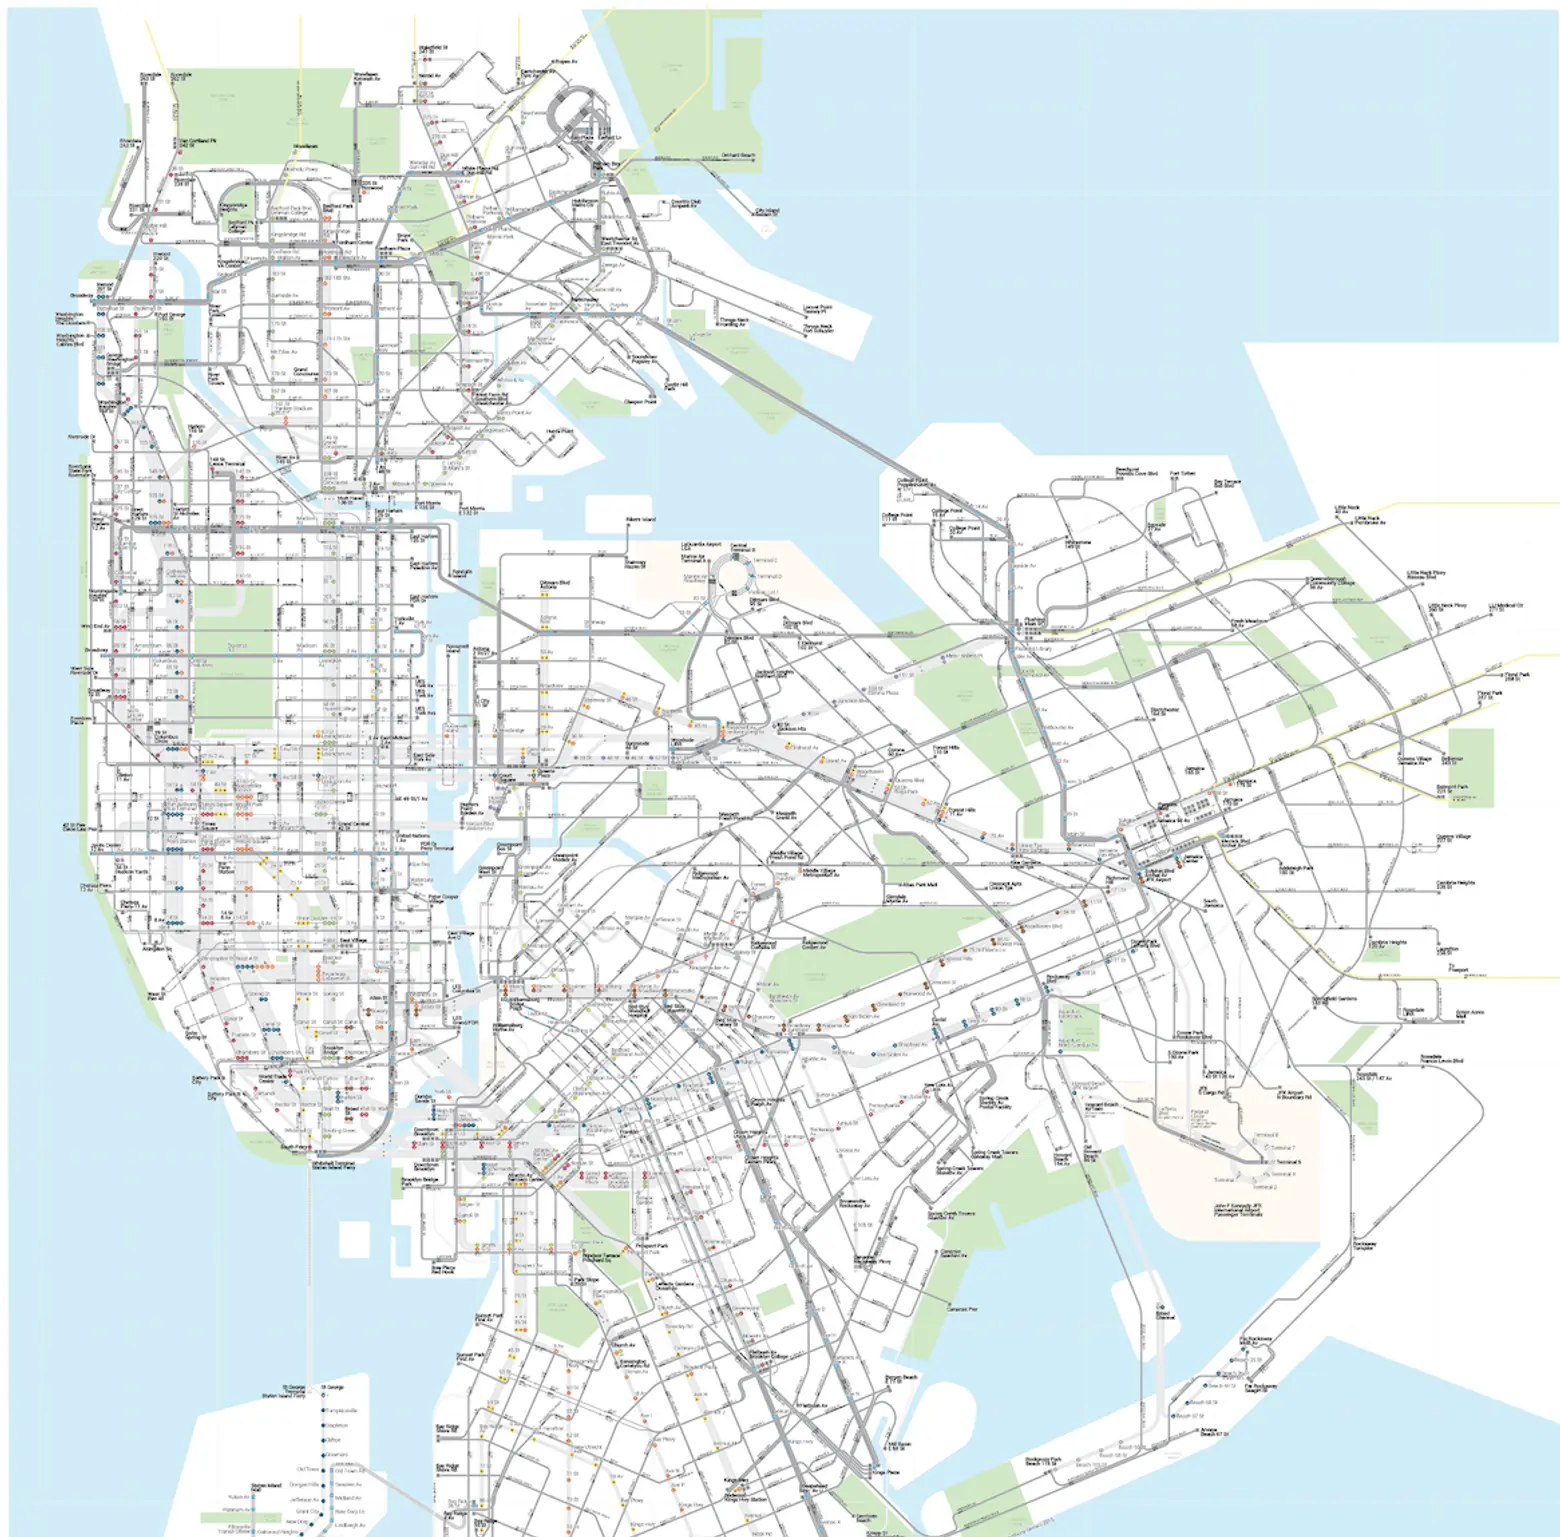 NYC Transit Map, NYC Transit, NYC Subway, MTA, Anthony Denaro, MetroCard, Subway Map, NYC bus, maps